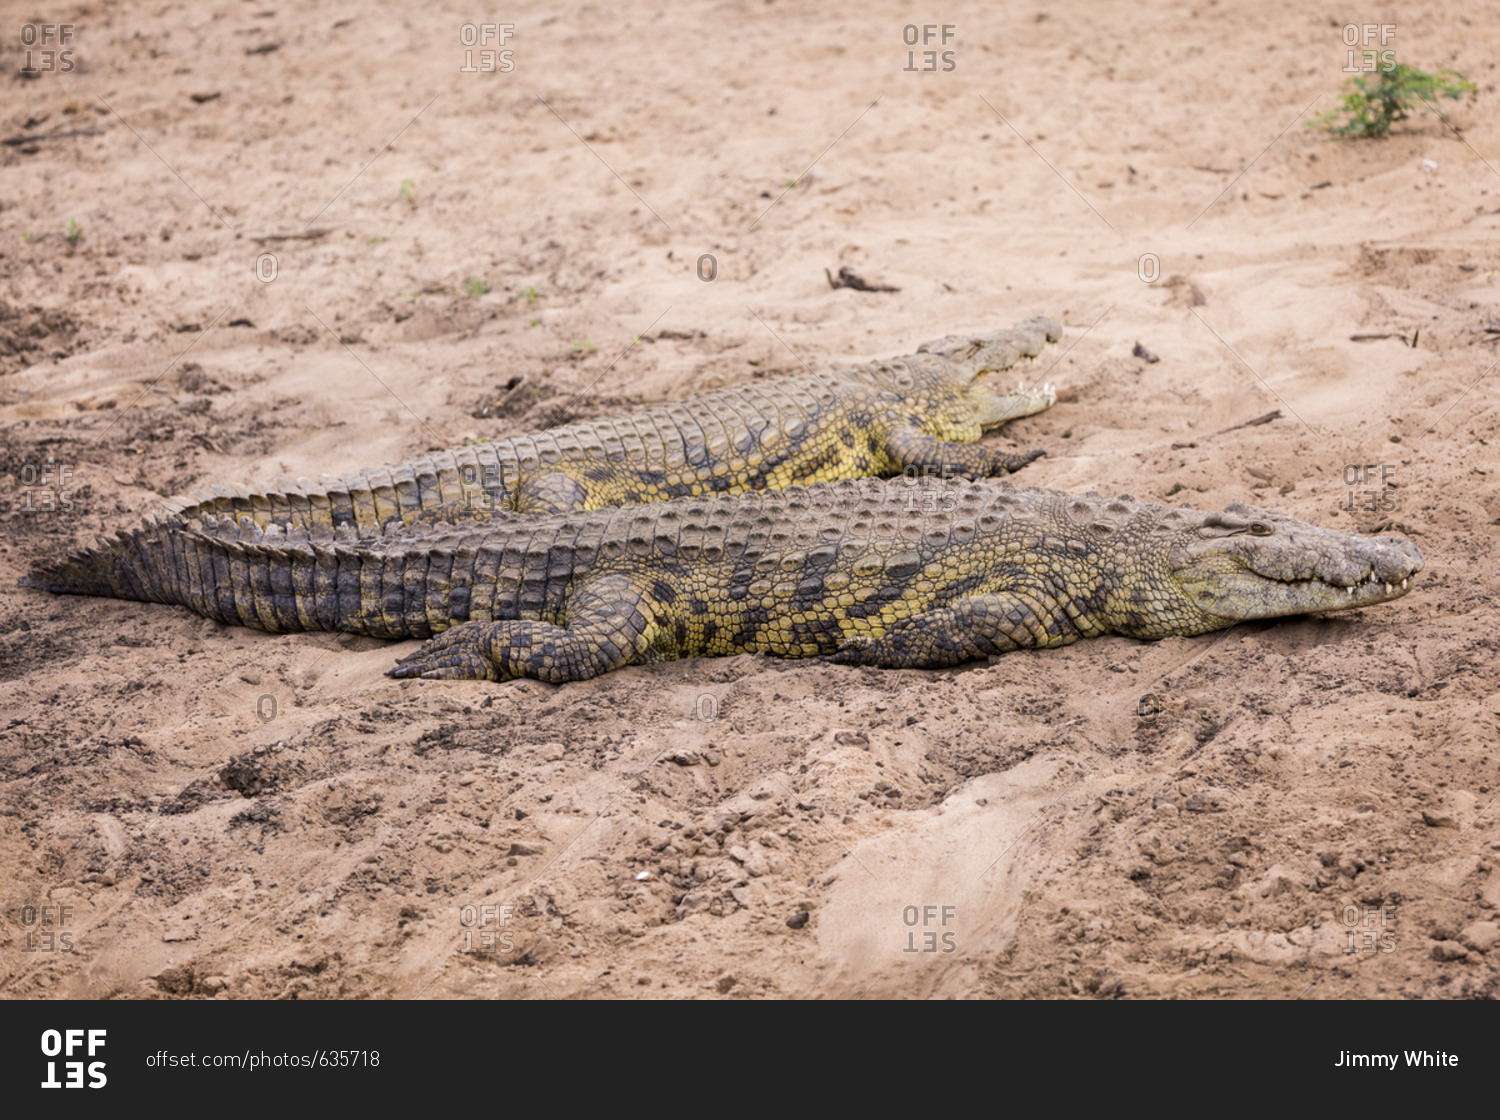 Nile Crocodile (Crocodylus niloticus) on the banks of the Grumeti River in the Serengeti National Park, Tanzania